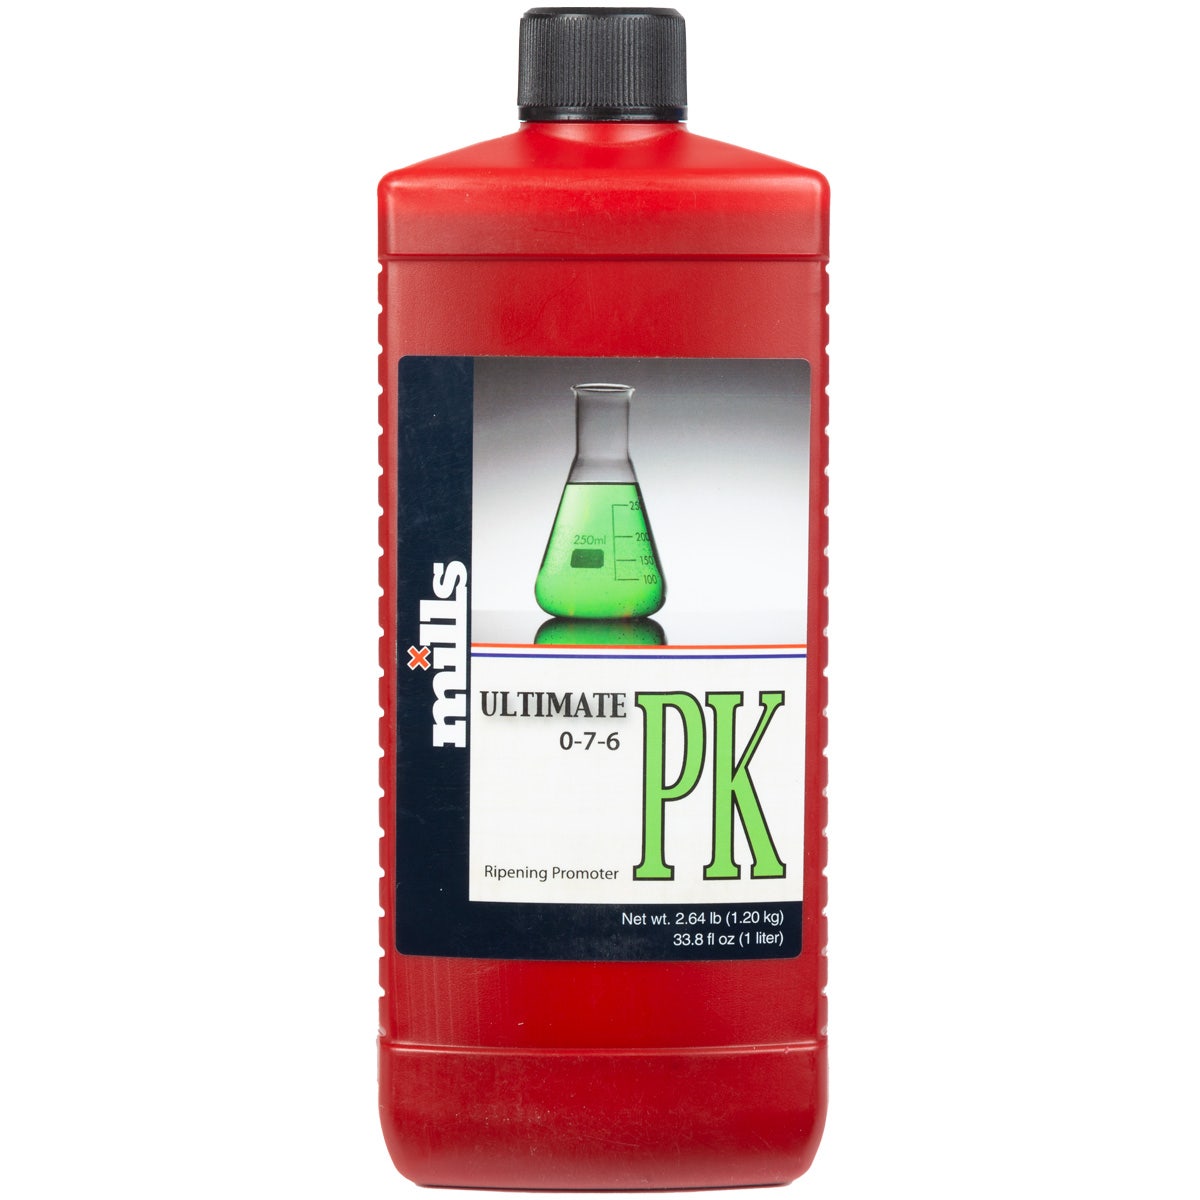 Mills Nutrients Ultimate PK 1 litre